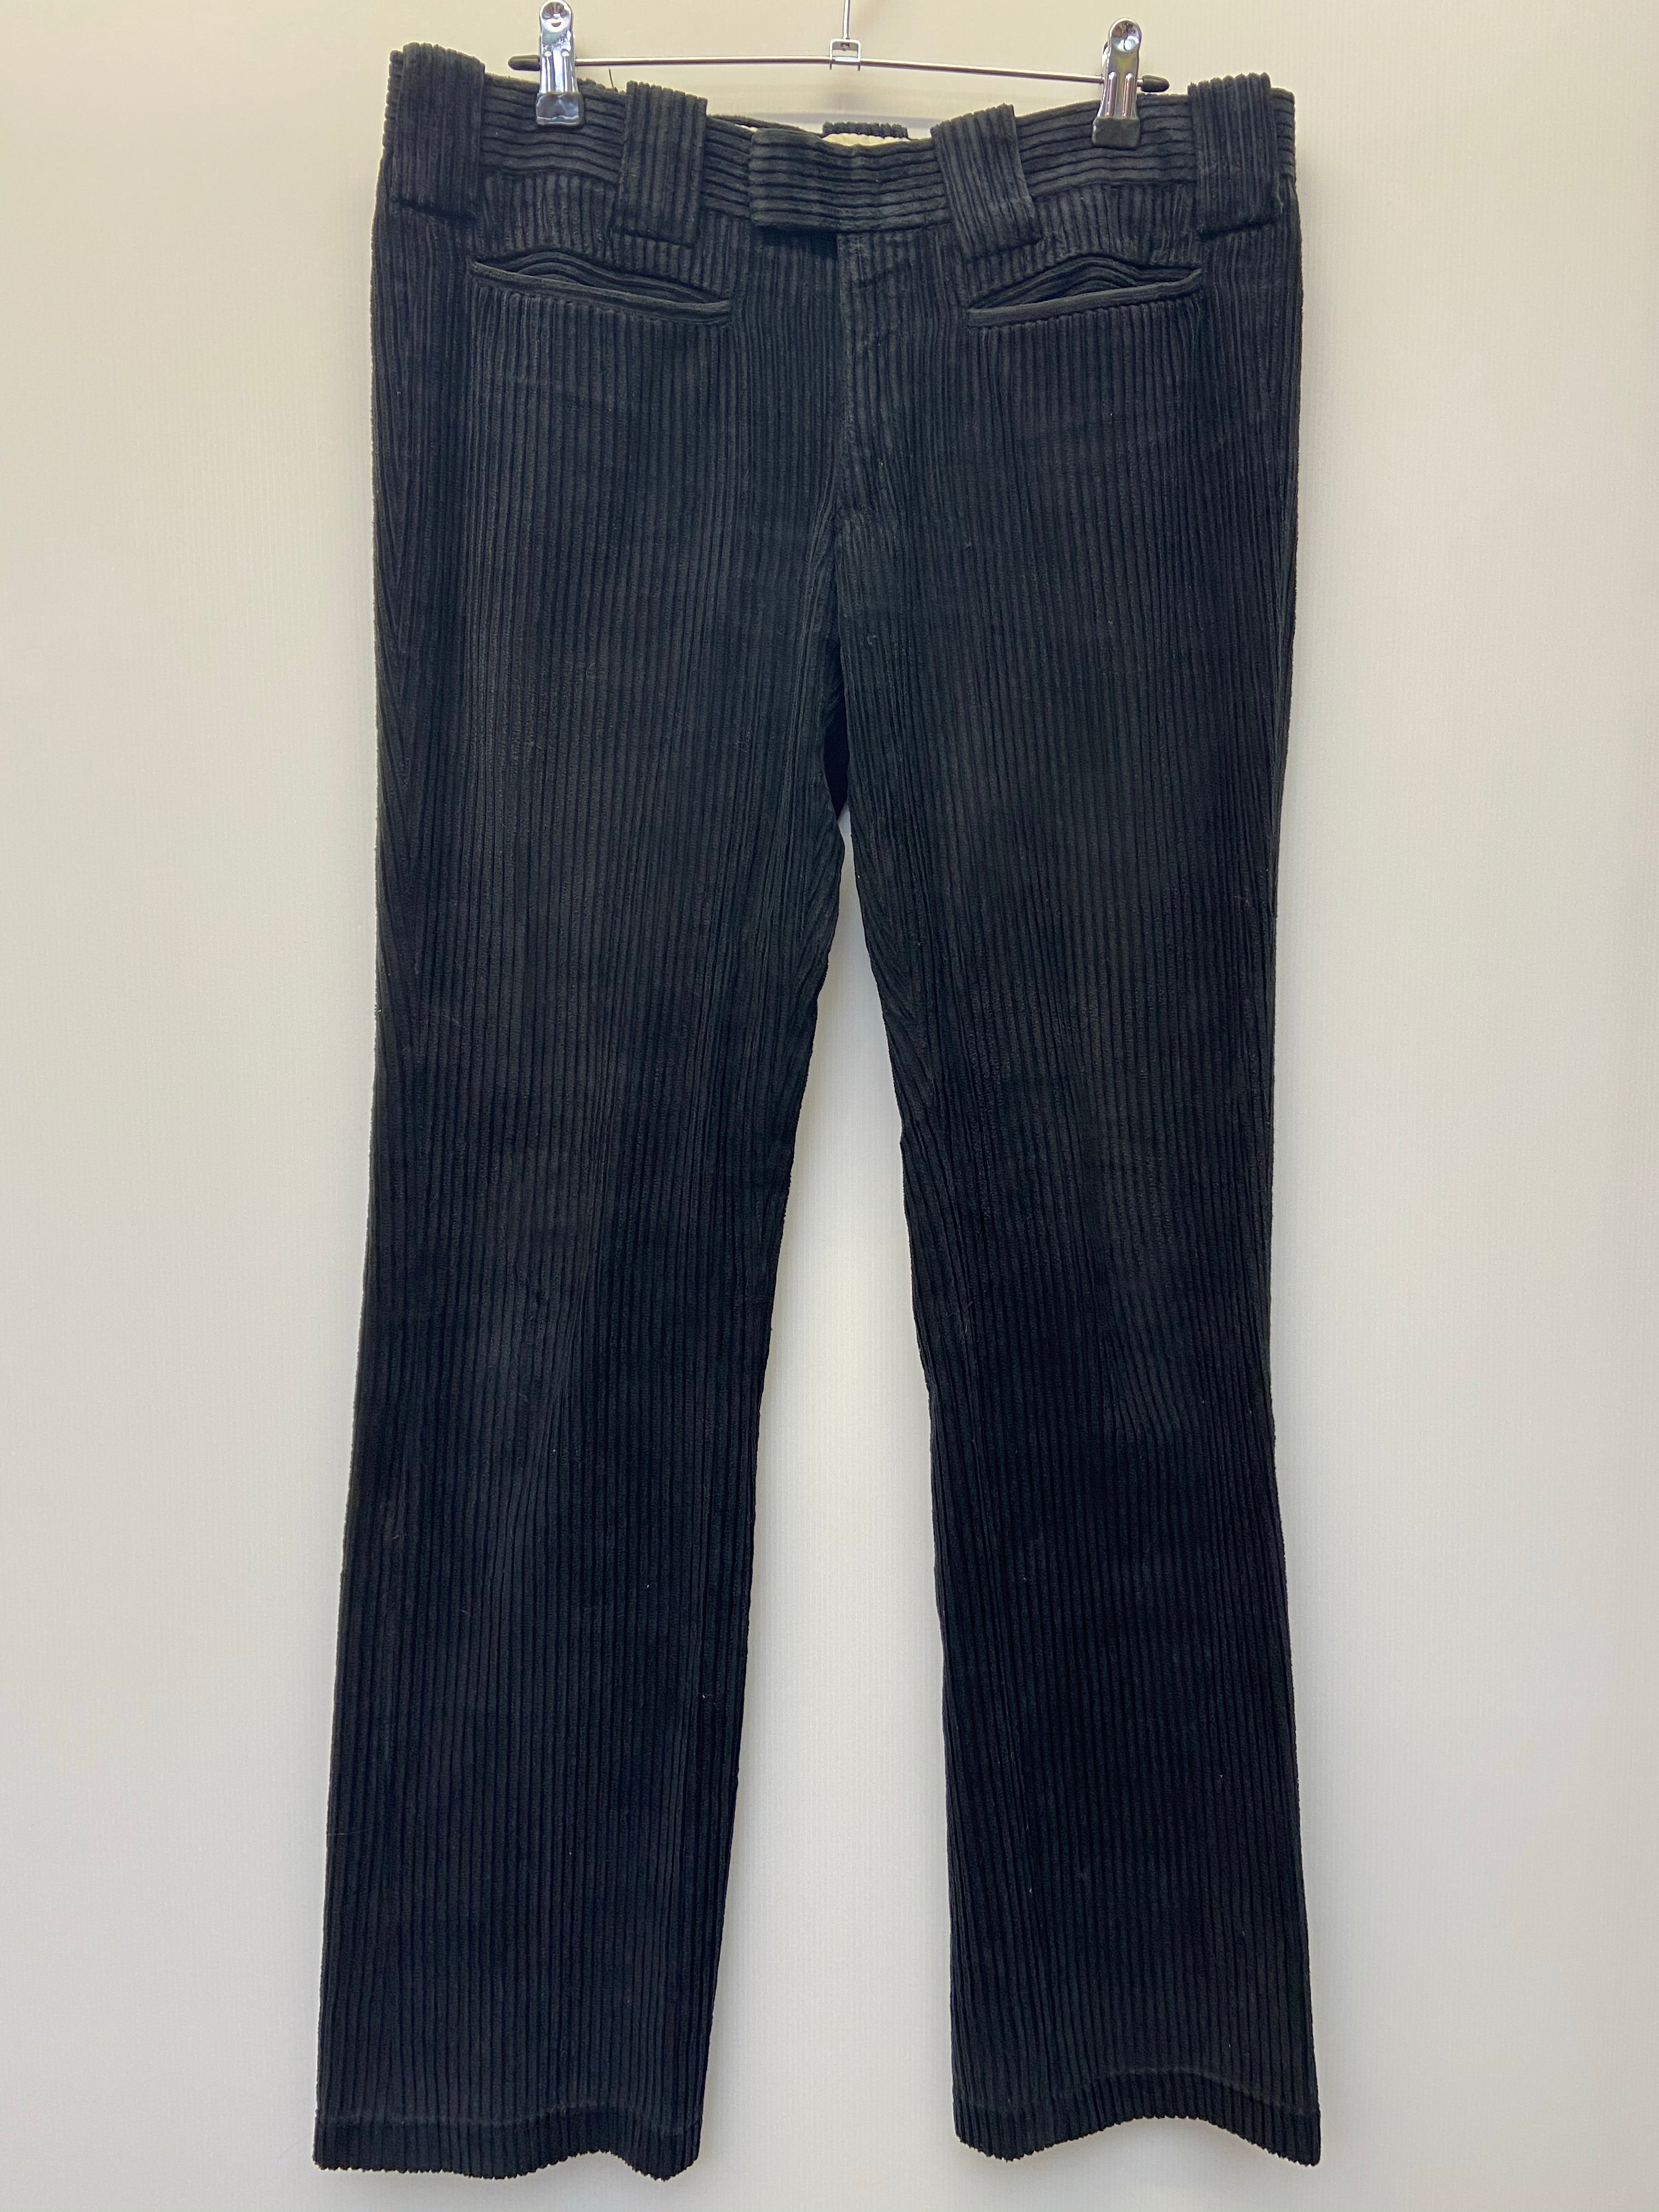 1970s Straight Leg Corduroy Trousers in Black - Size W32 L34